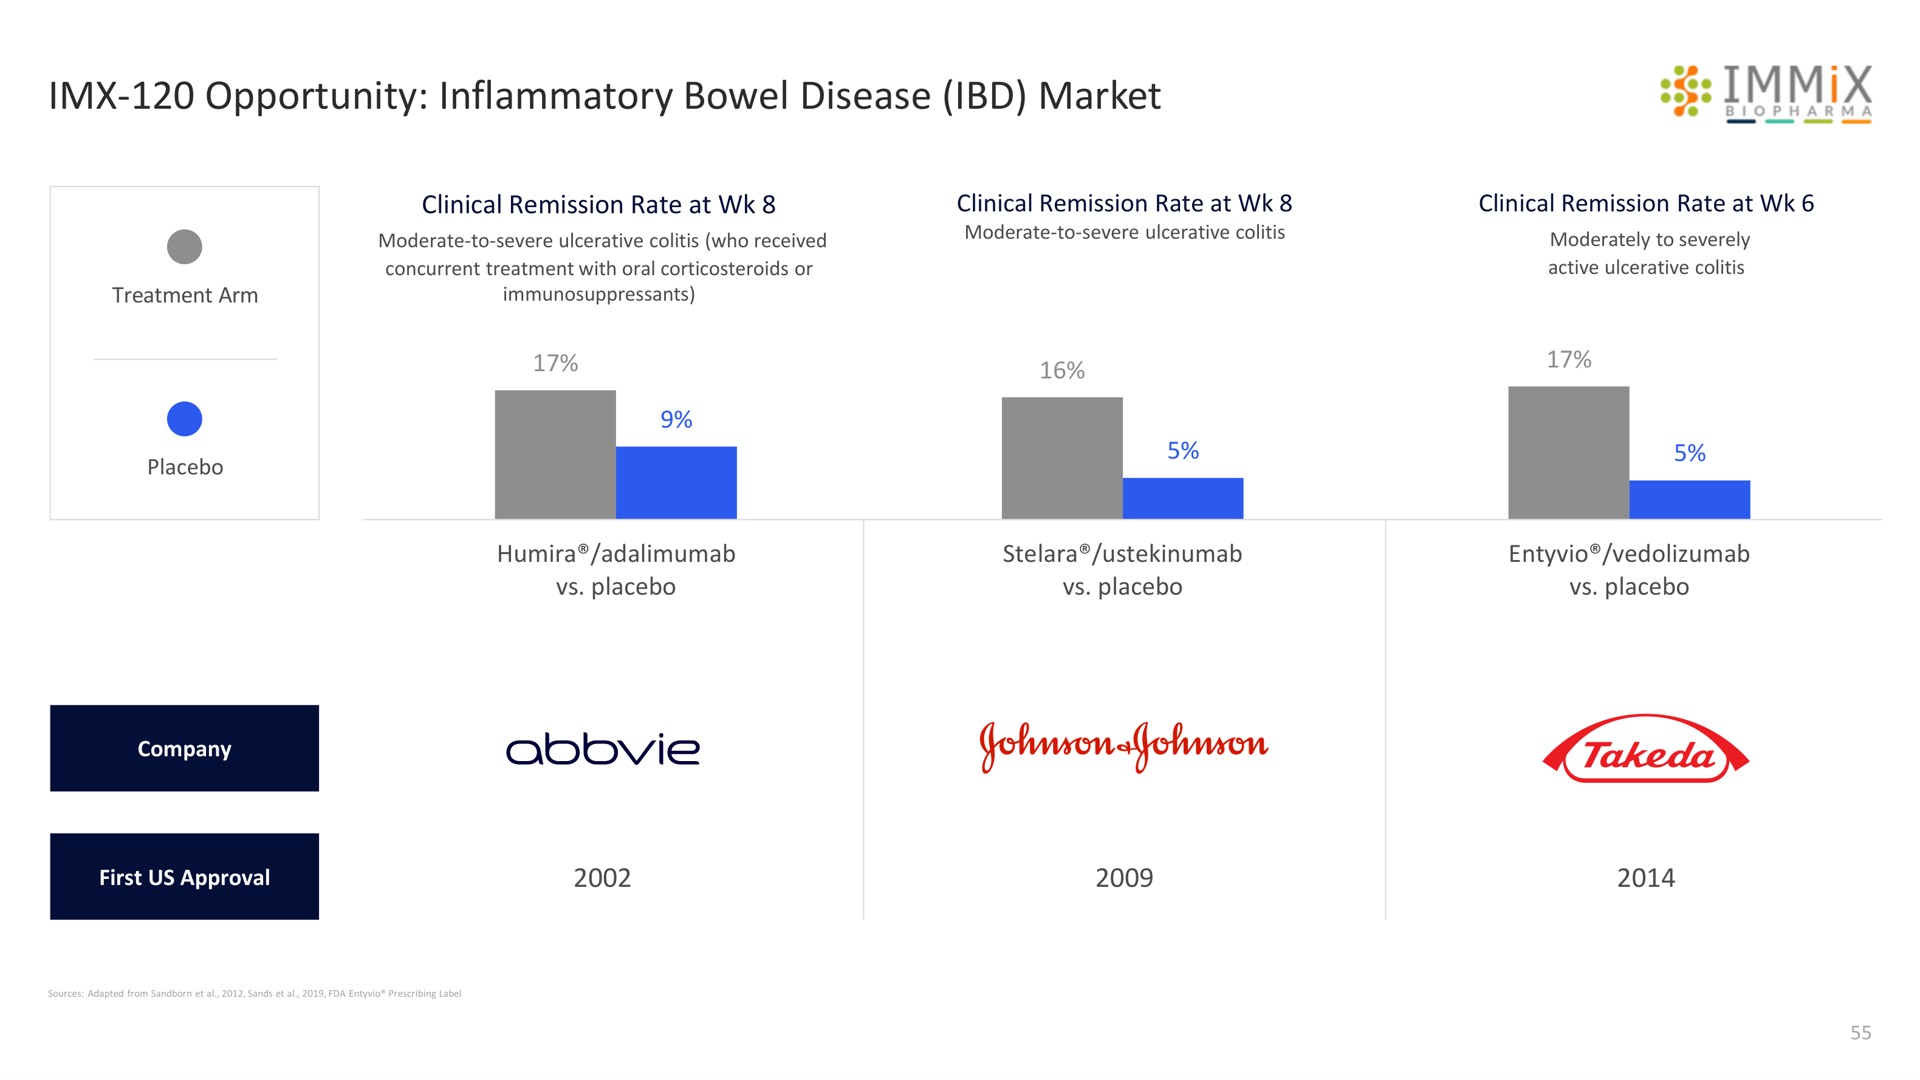 opportunity inflammatory bowel disease market | Immix Biopharma